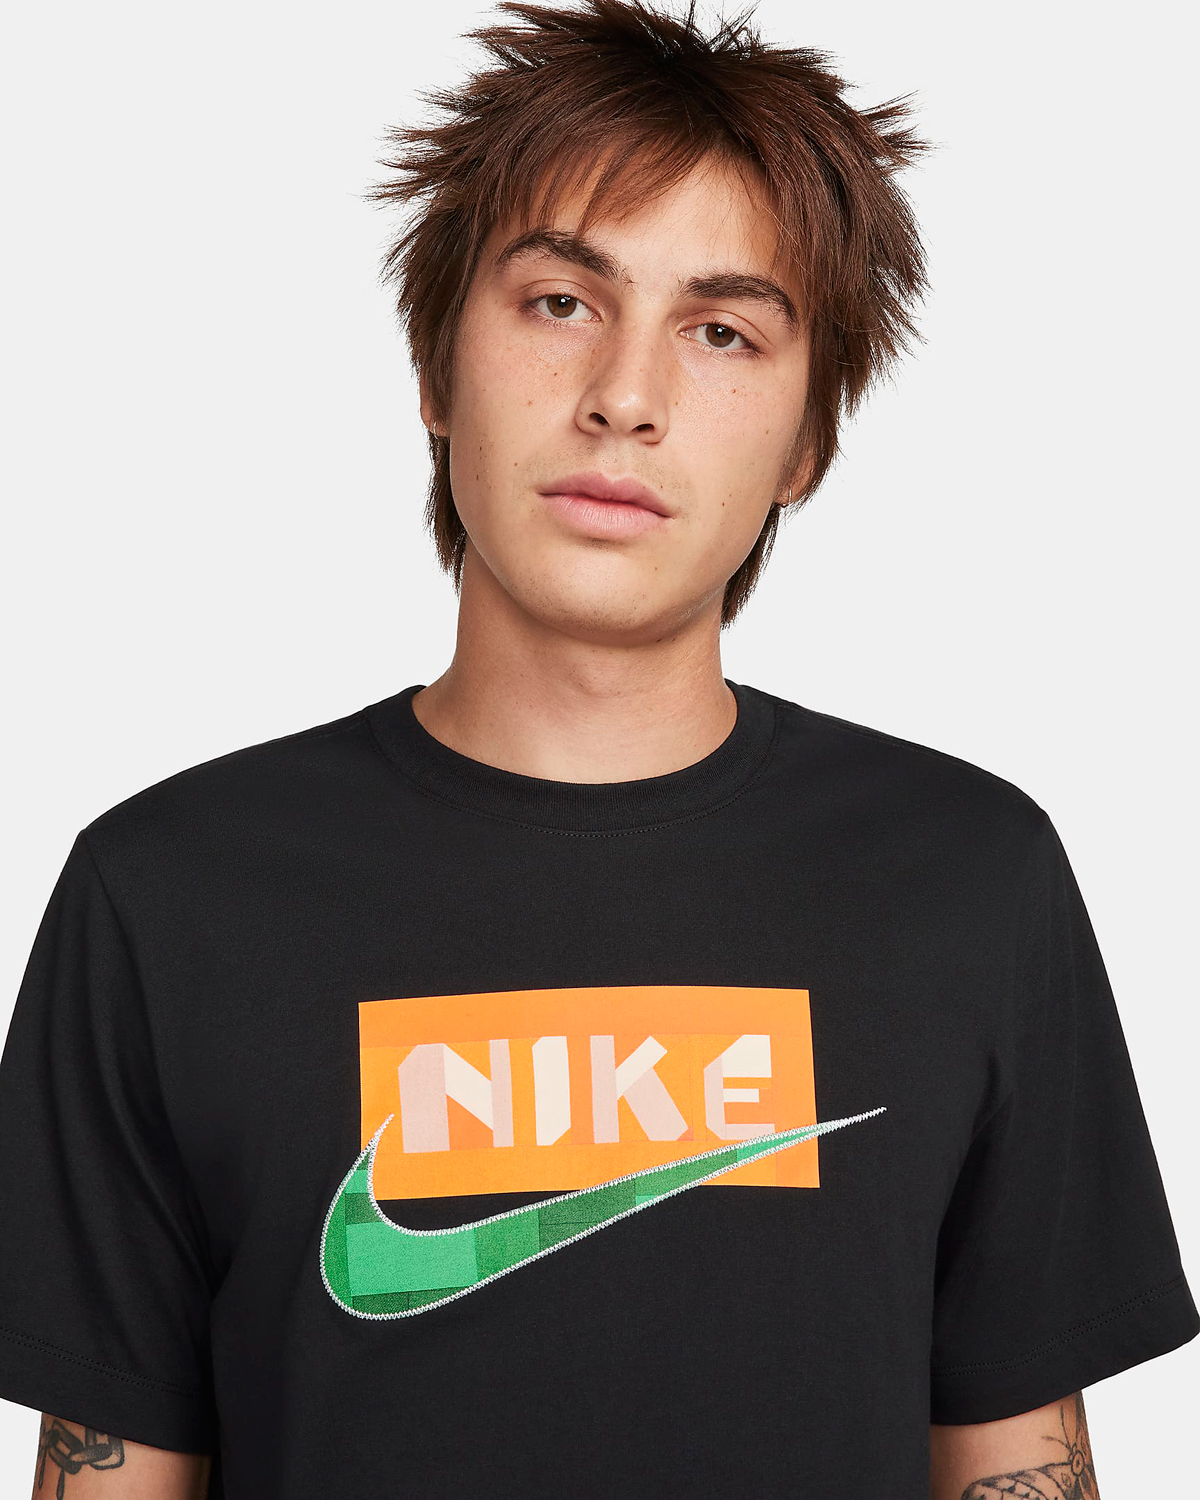 Nike-Sportswear-T-Shirt-Black-Orange-Green-2